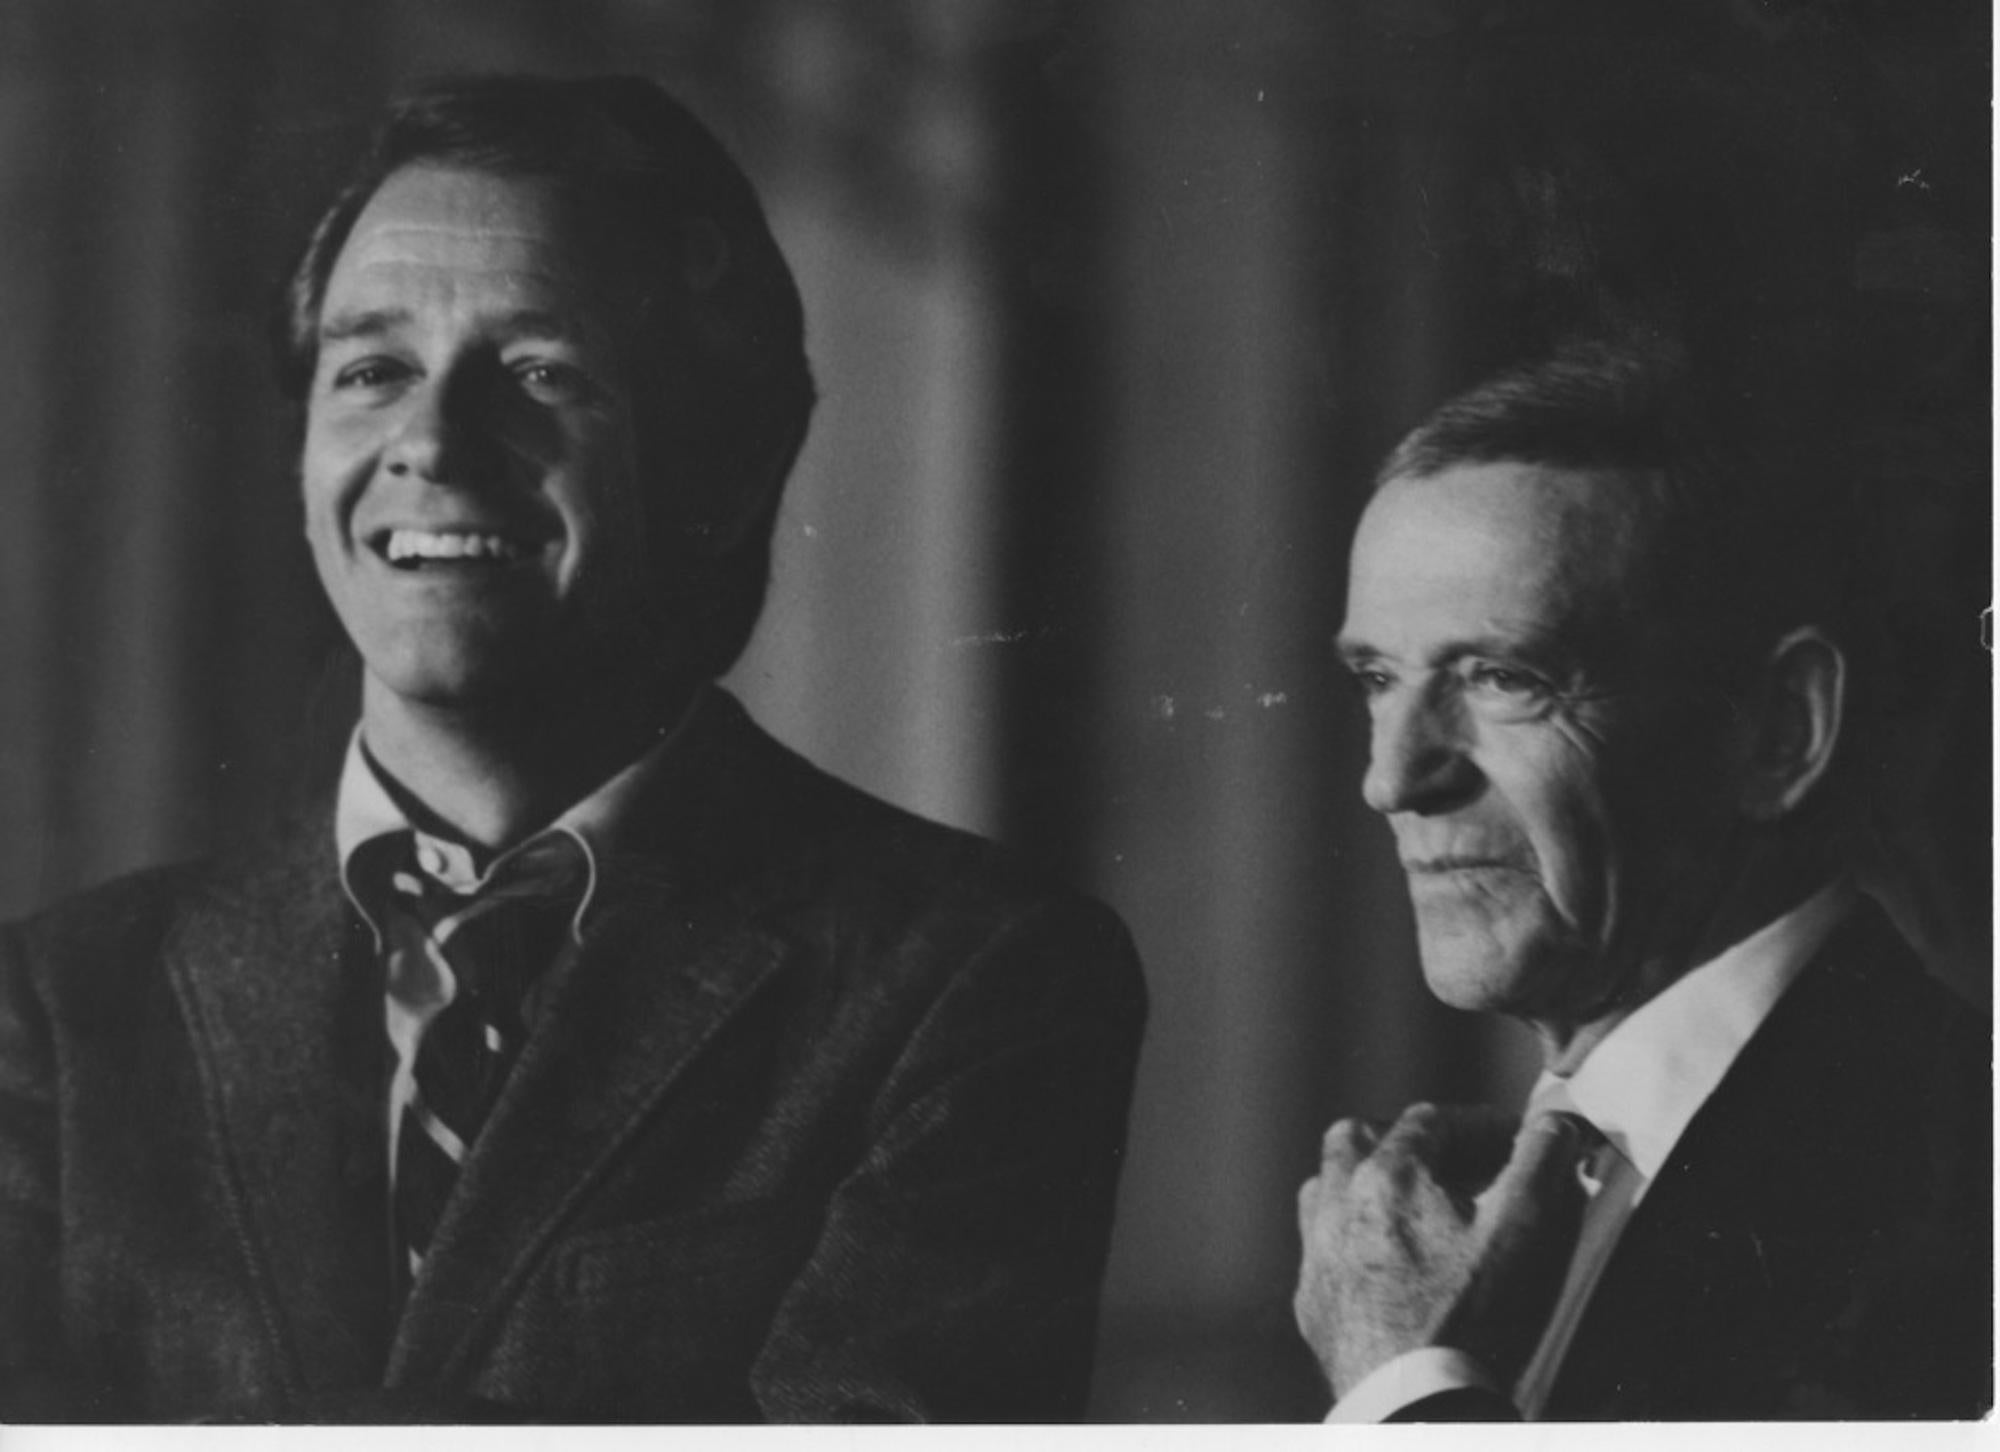 Fred Astaire et Richard Crenna - Photo vintage, années 1980